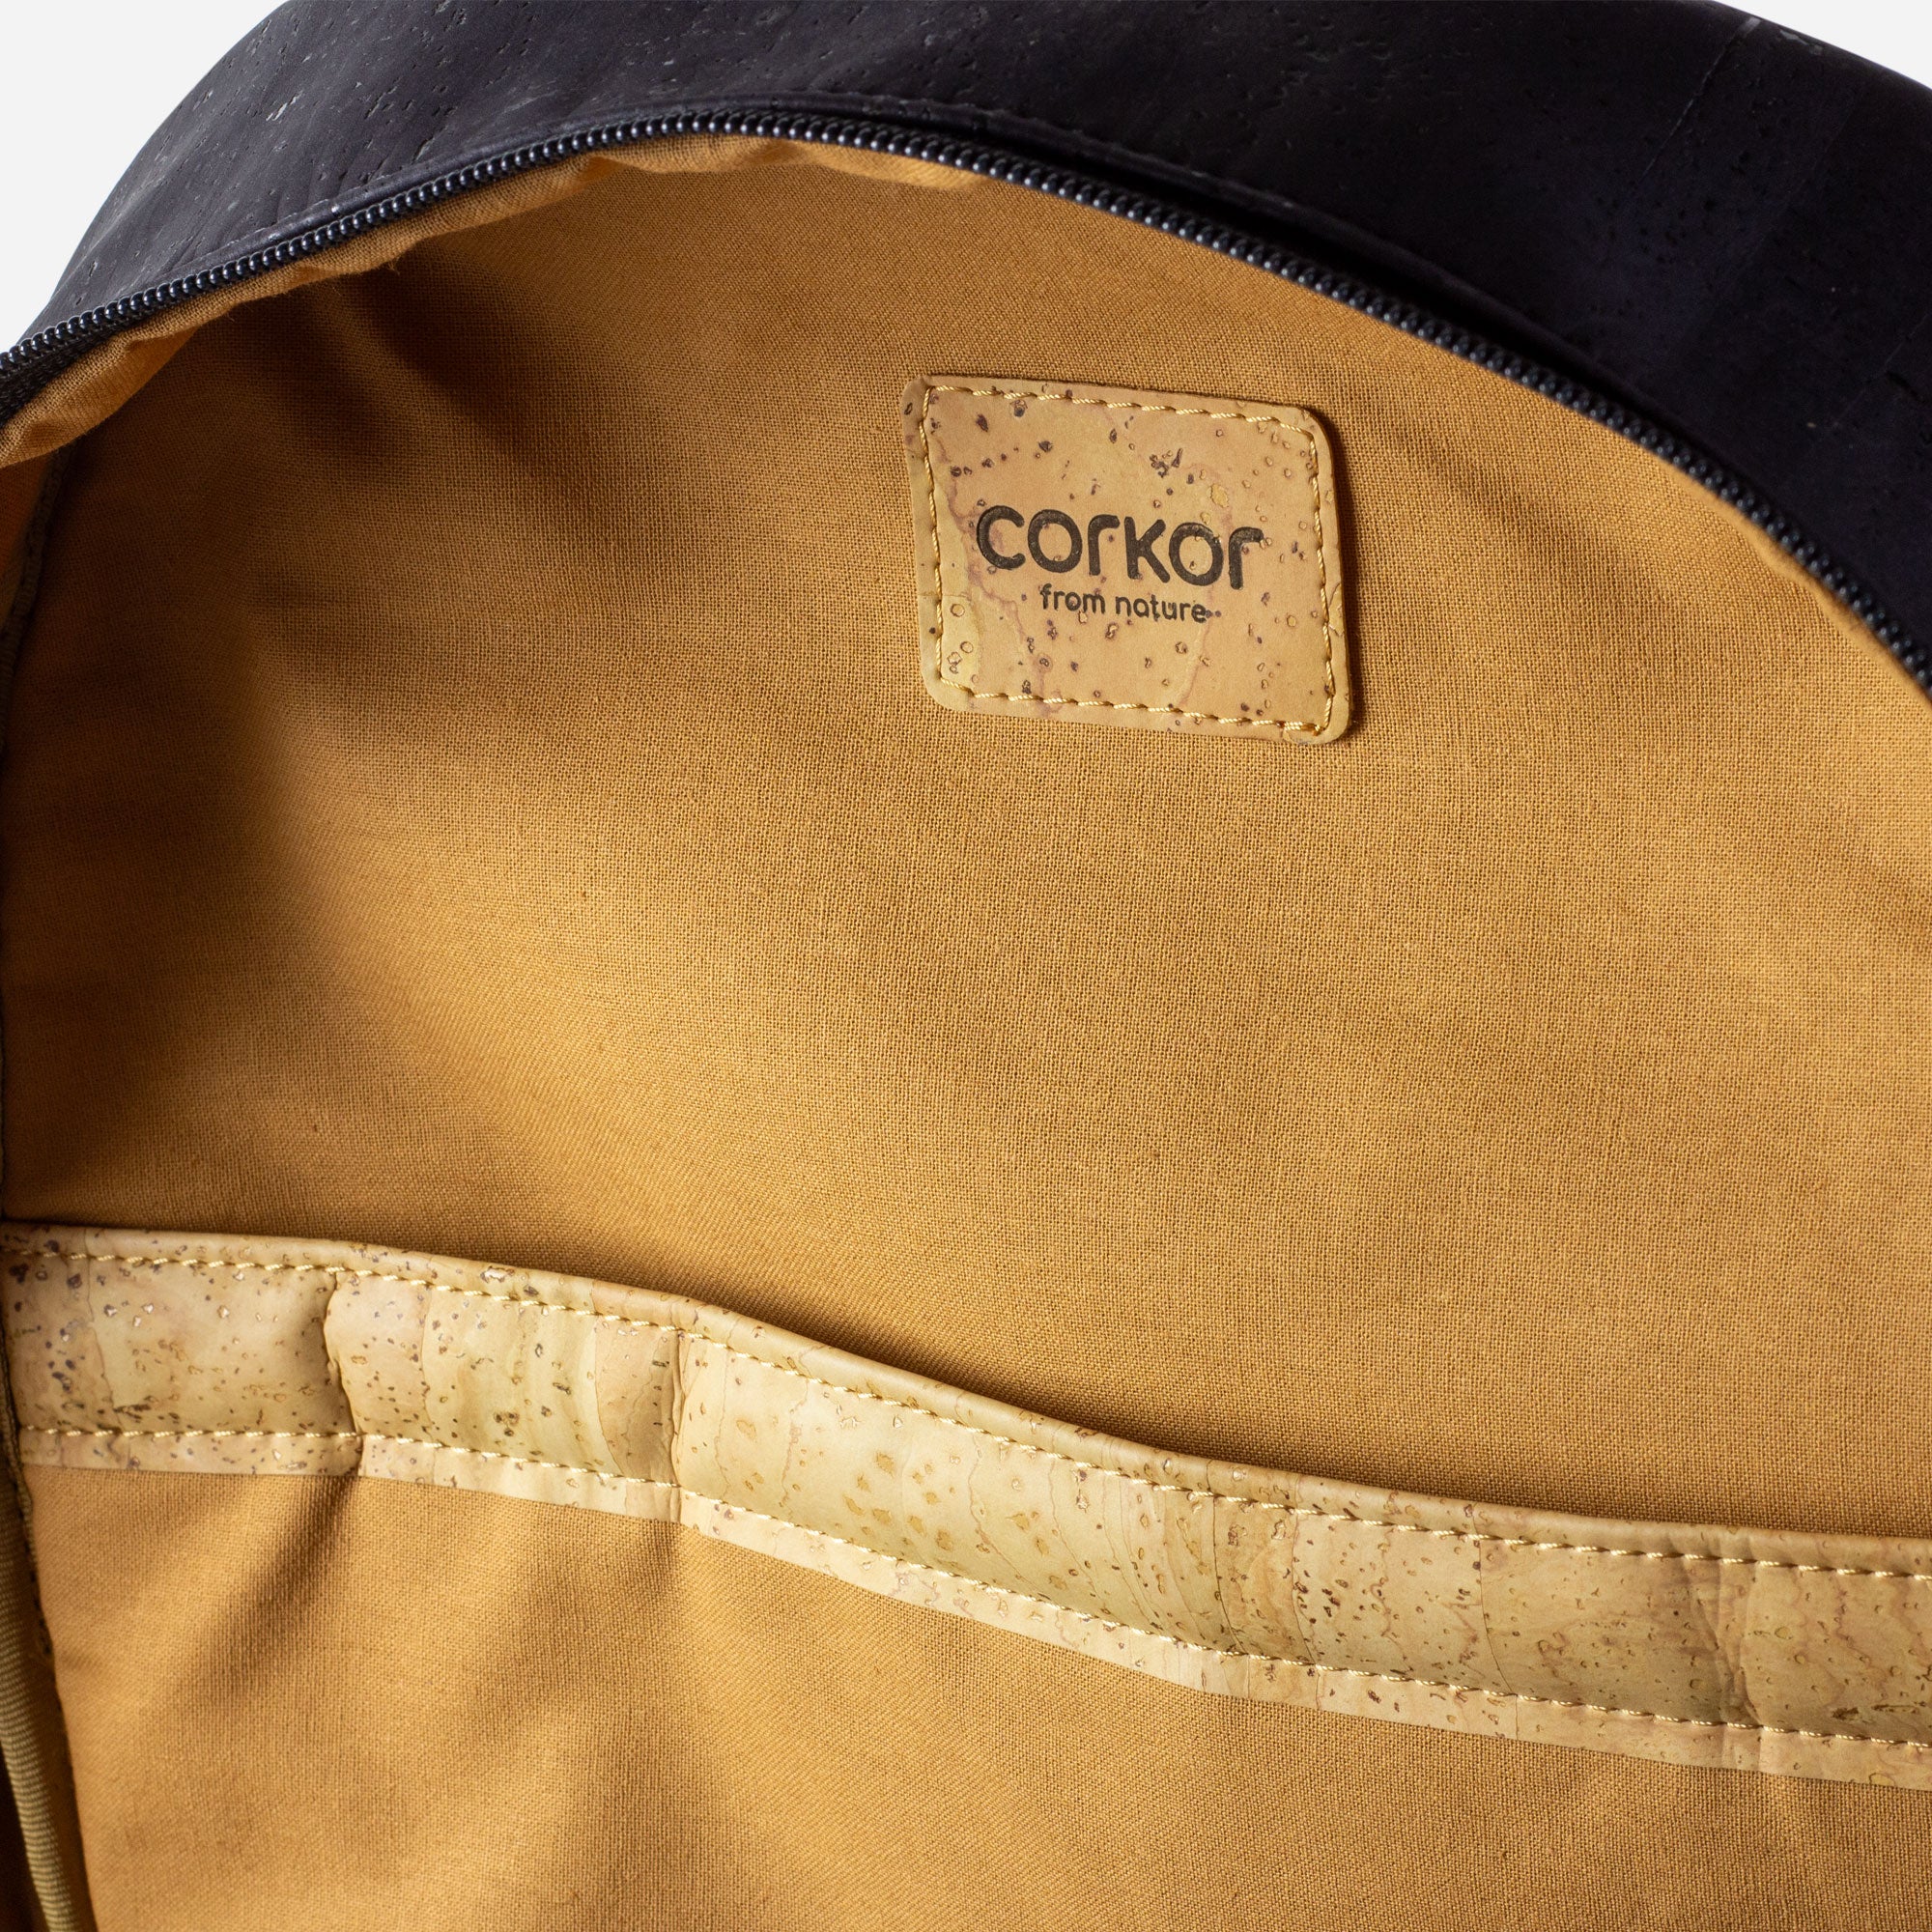 Cork Backpack Unisex